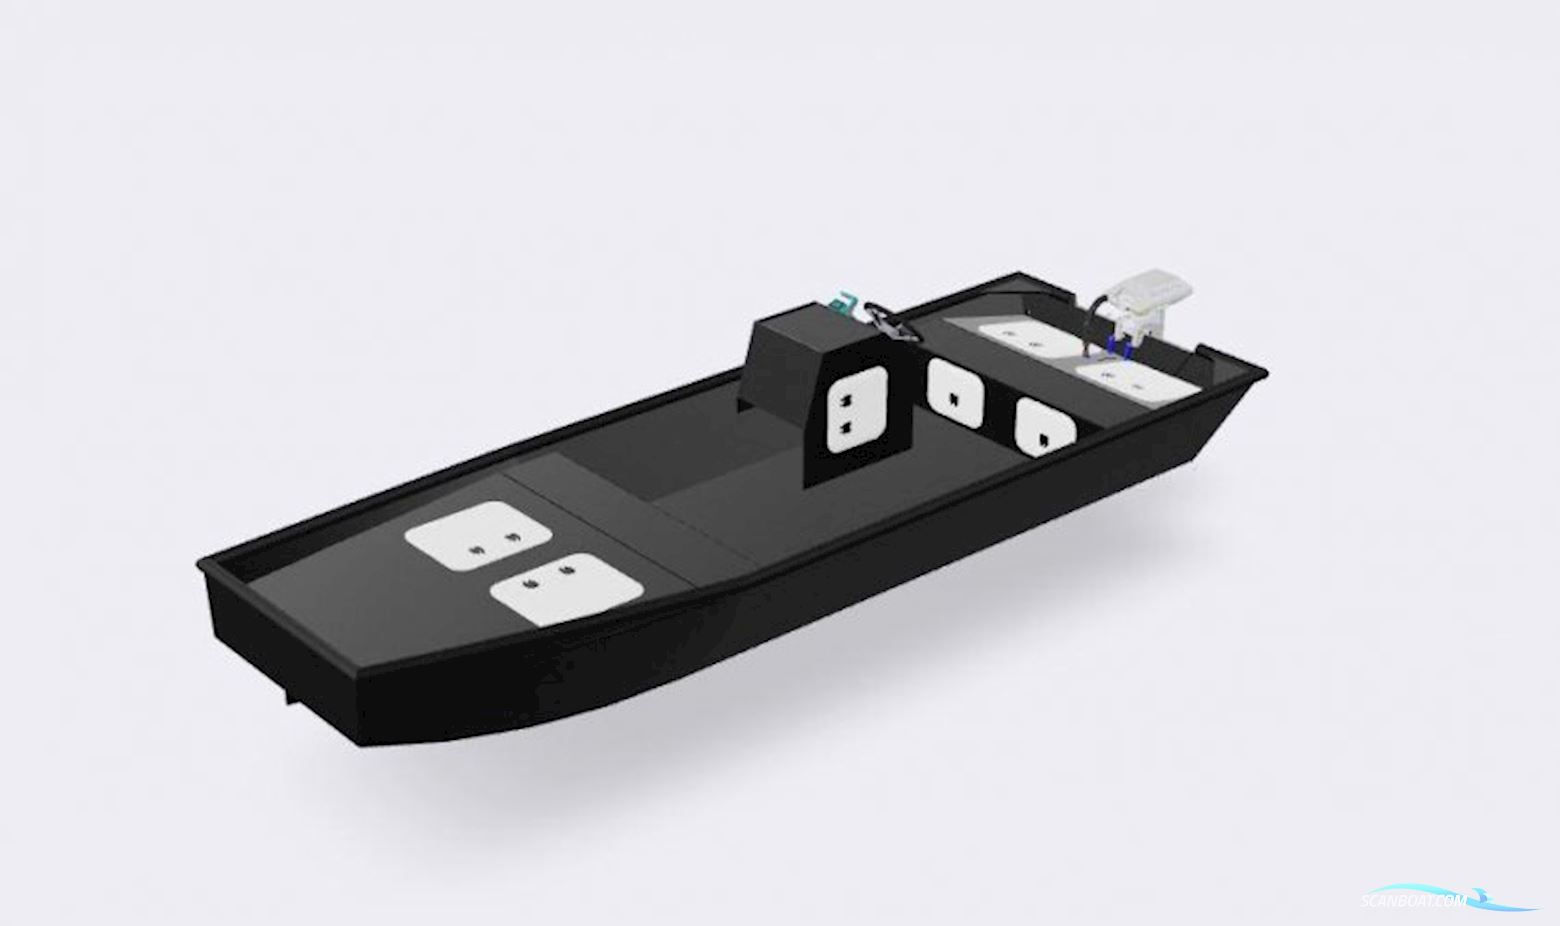 Black Workboats 500 Pro Console Ex beroepsschepen 2023, met Suzuki / Honda / Elektrisch motor, The Netherlands